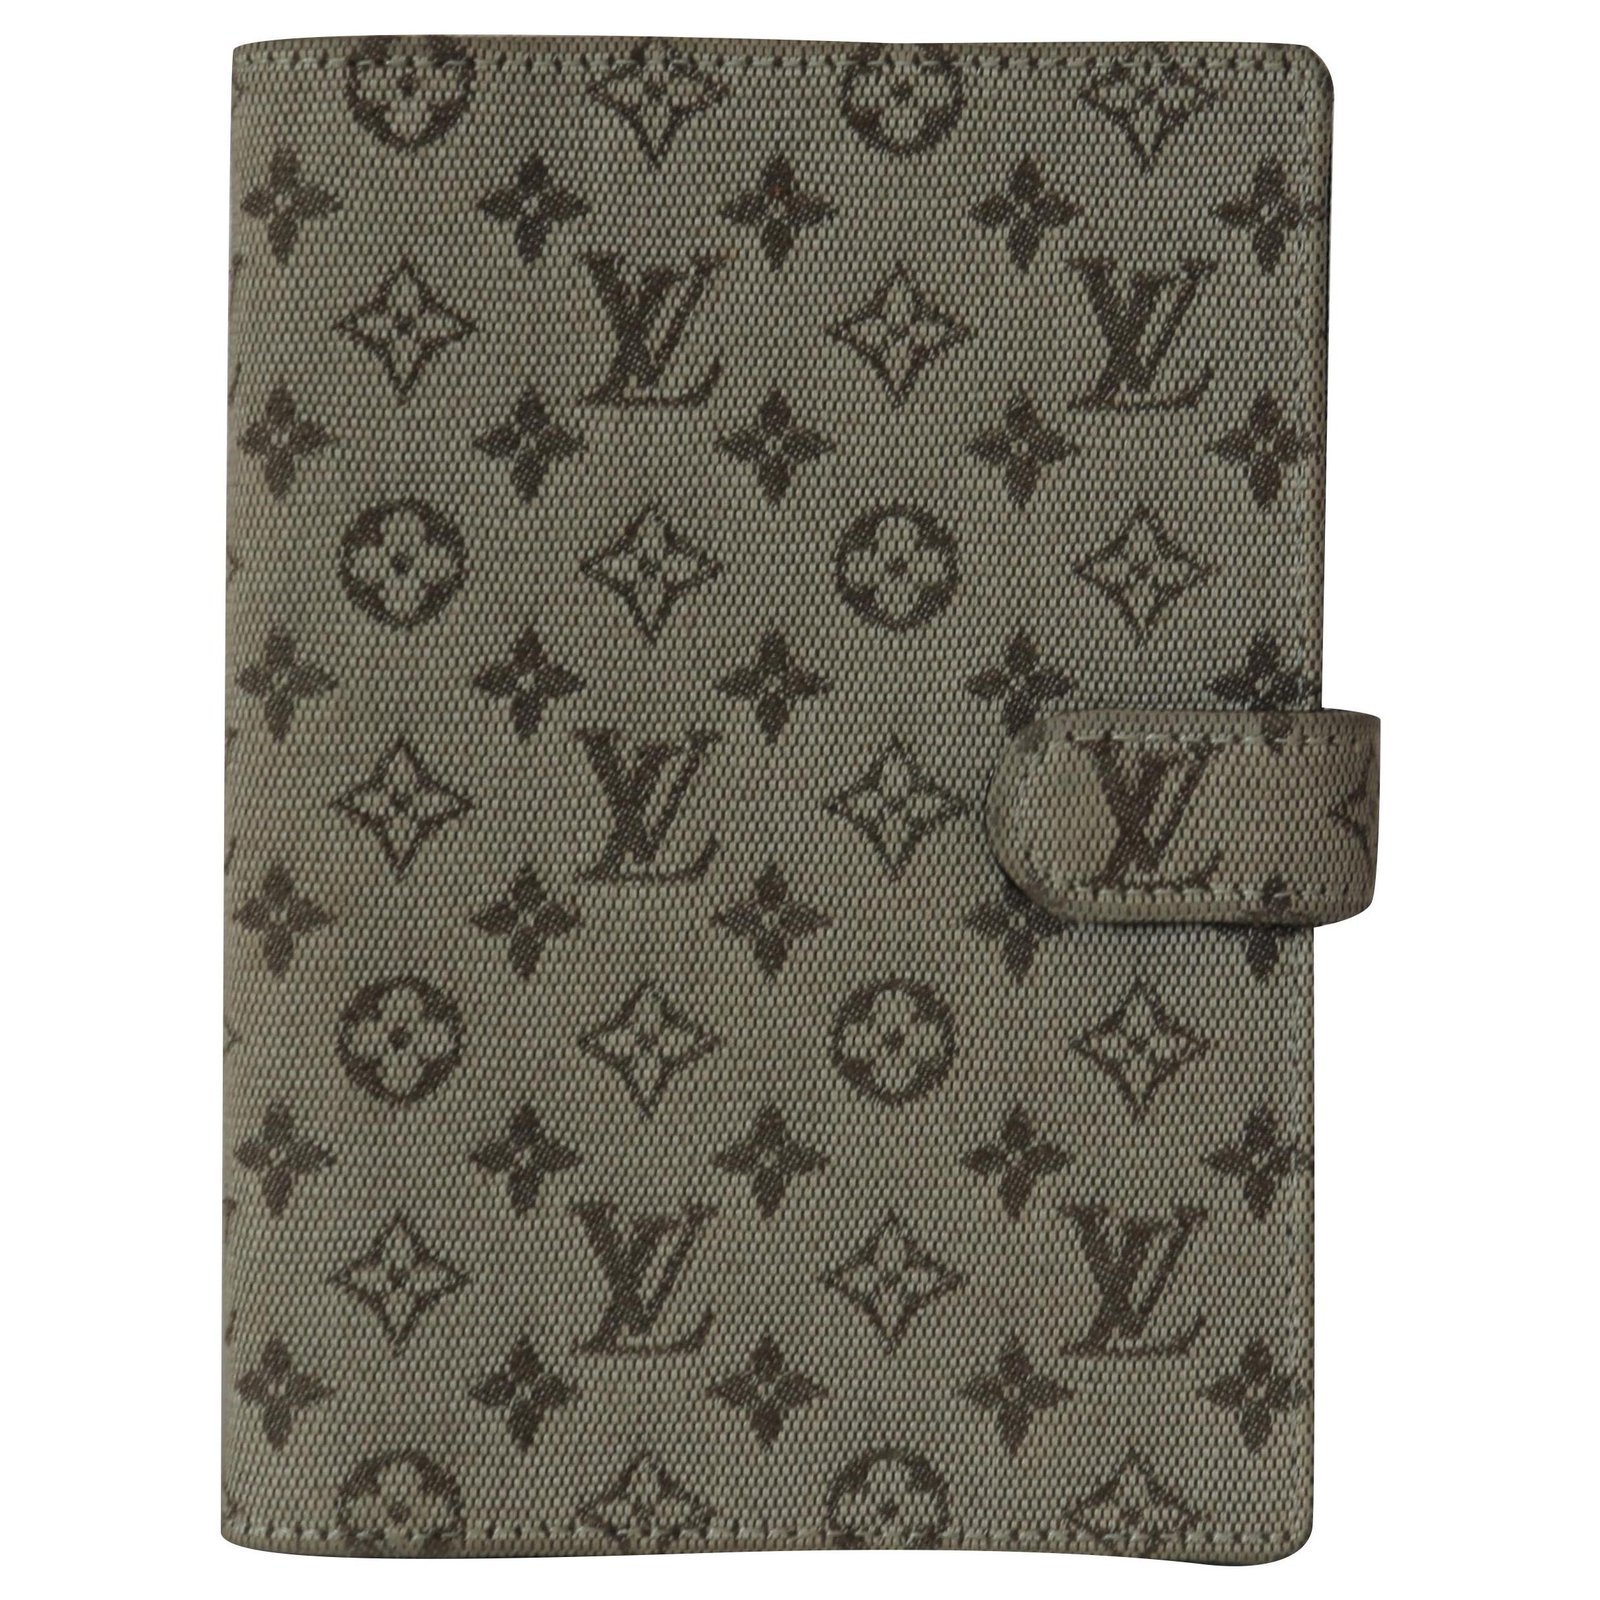 Louis Vuitton, Bags, Louis Vuitton Purse Card With Authentican